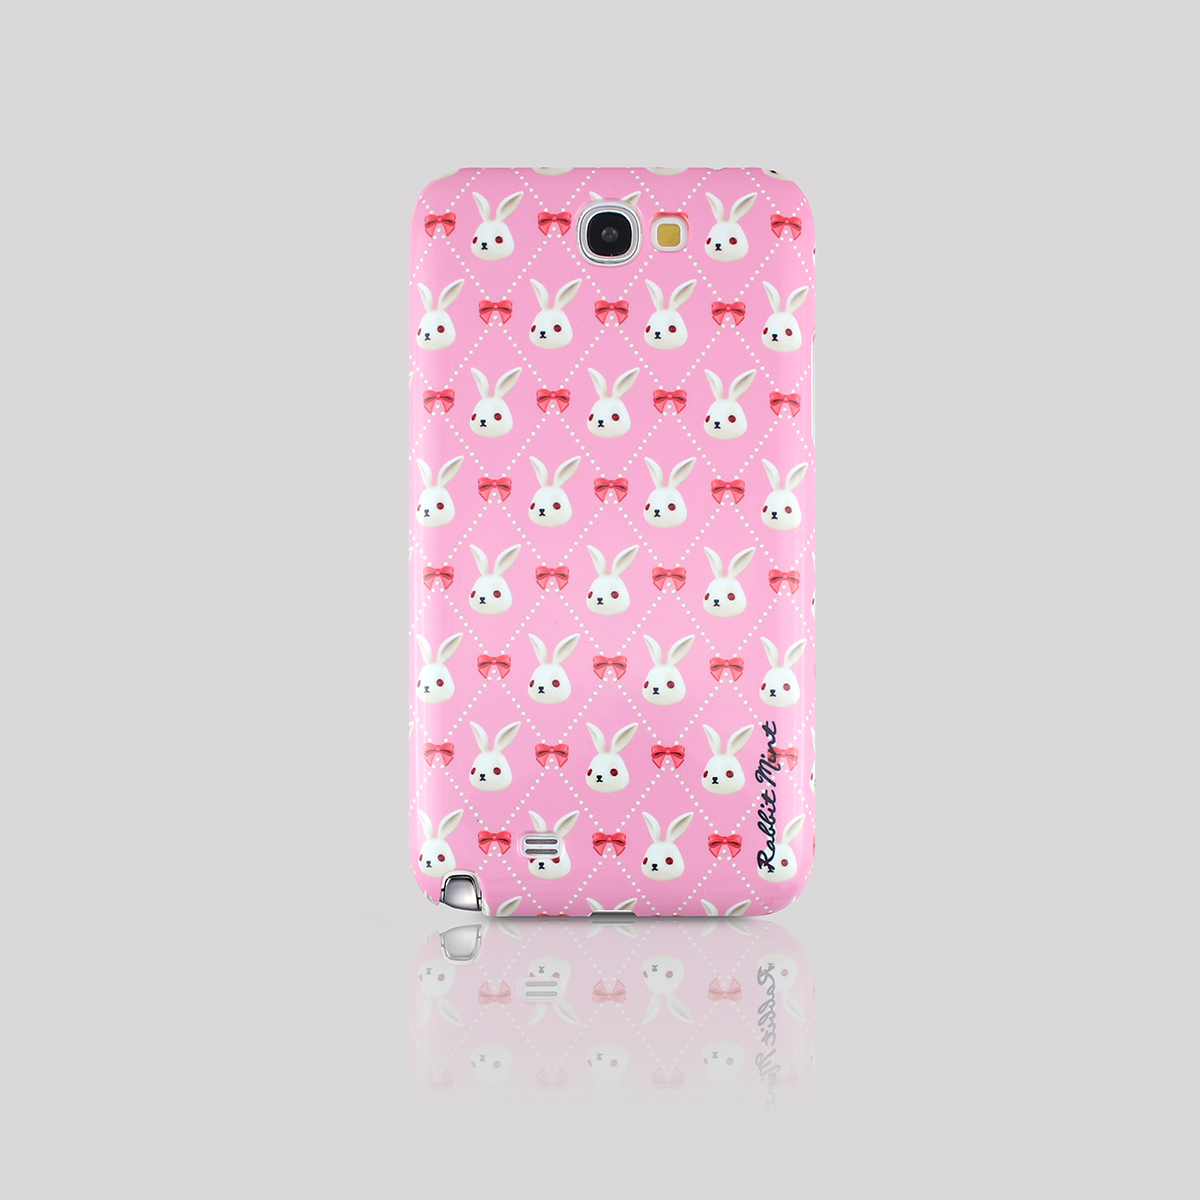 Samsung Galaxy Note 2 Case - Merry Boo & Pink Ribbon (m0013-n2)